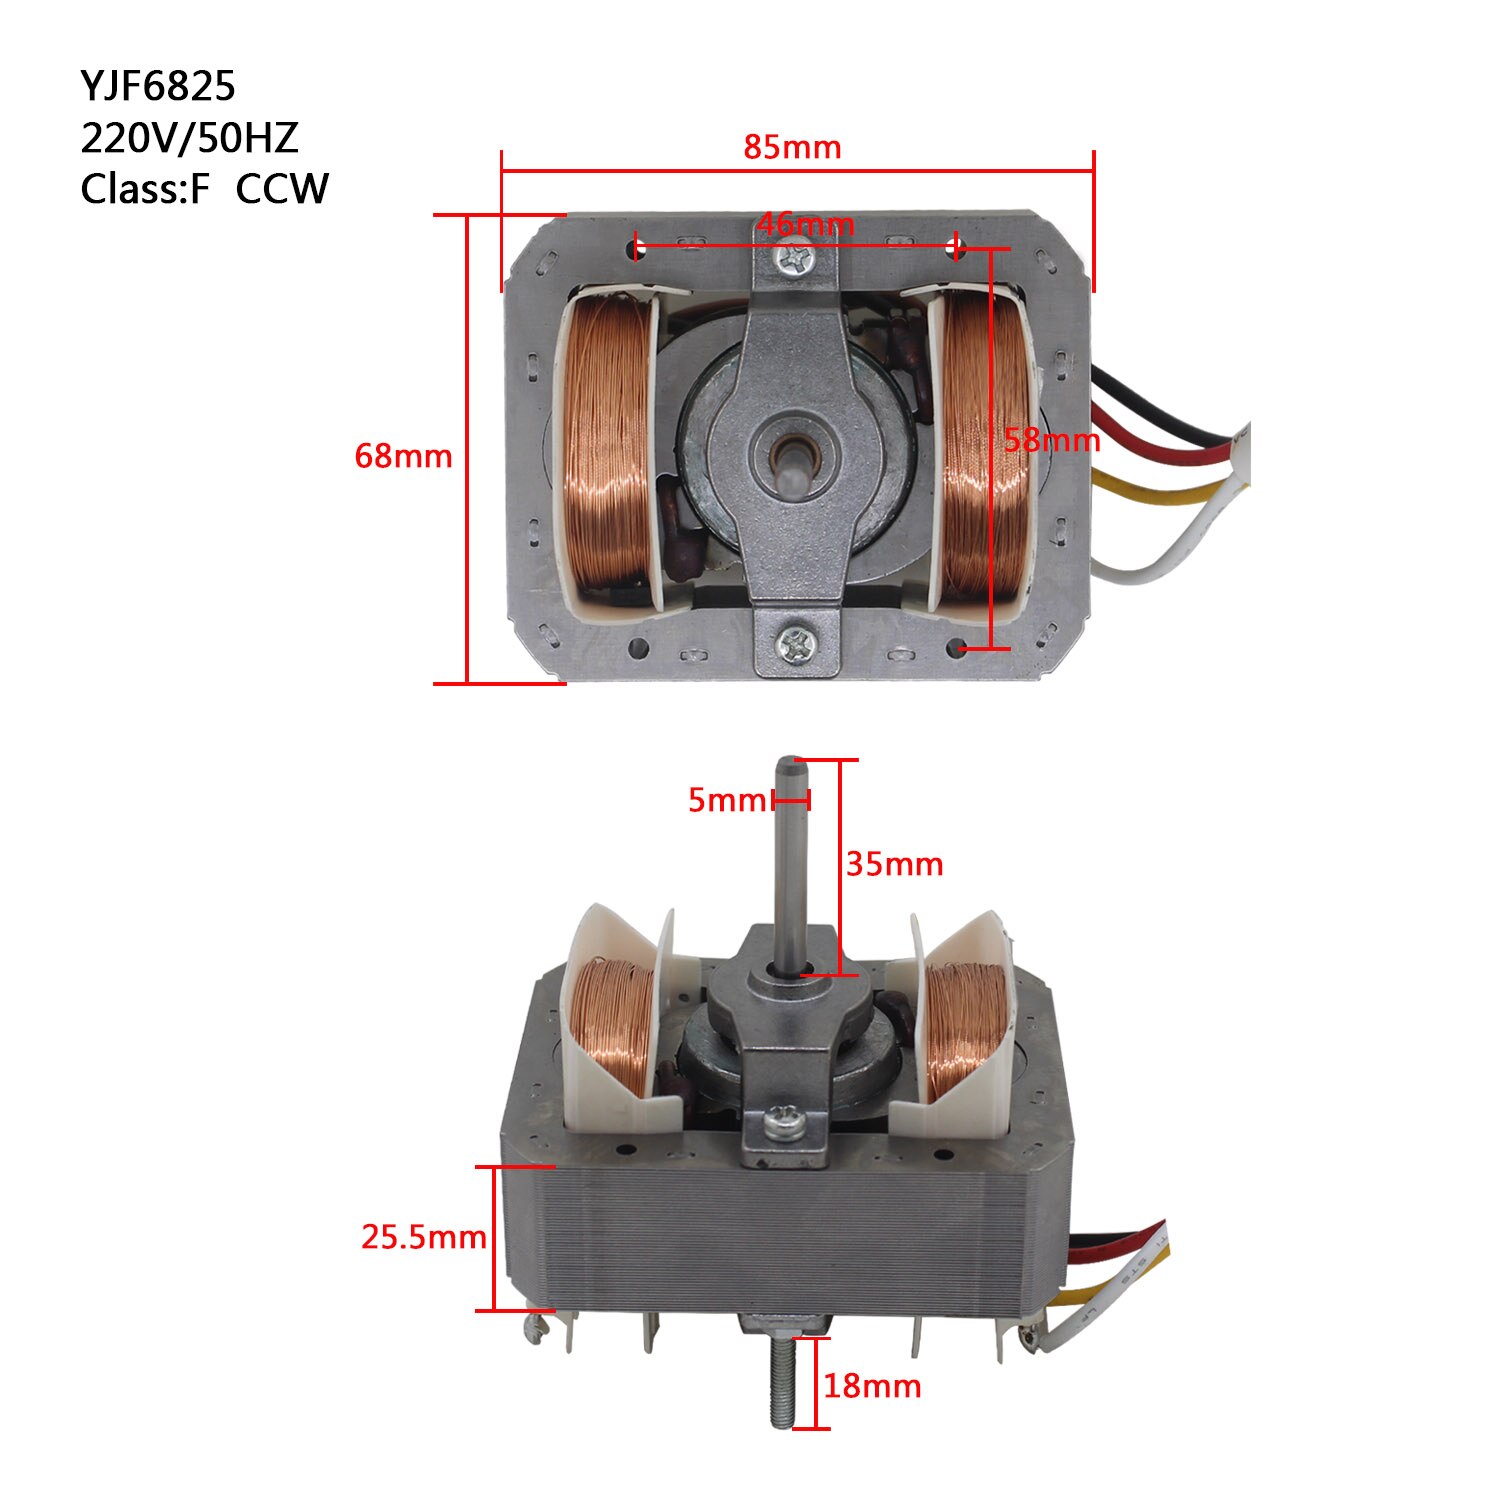 Motor Afzuigkap Fan Motor Vervanging Oven Motor Air Frye YJF6825 220V 50Hz F Ccw Kap Pole Motor